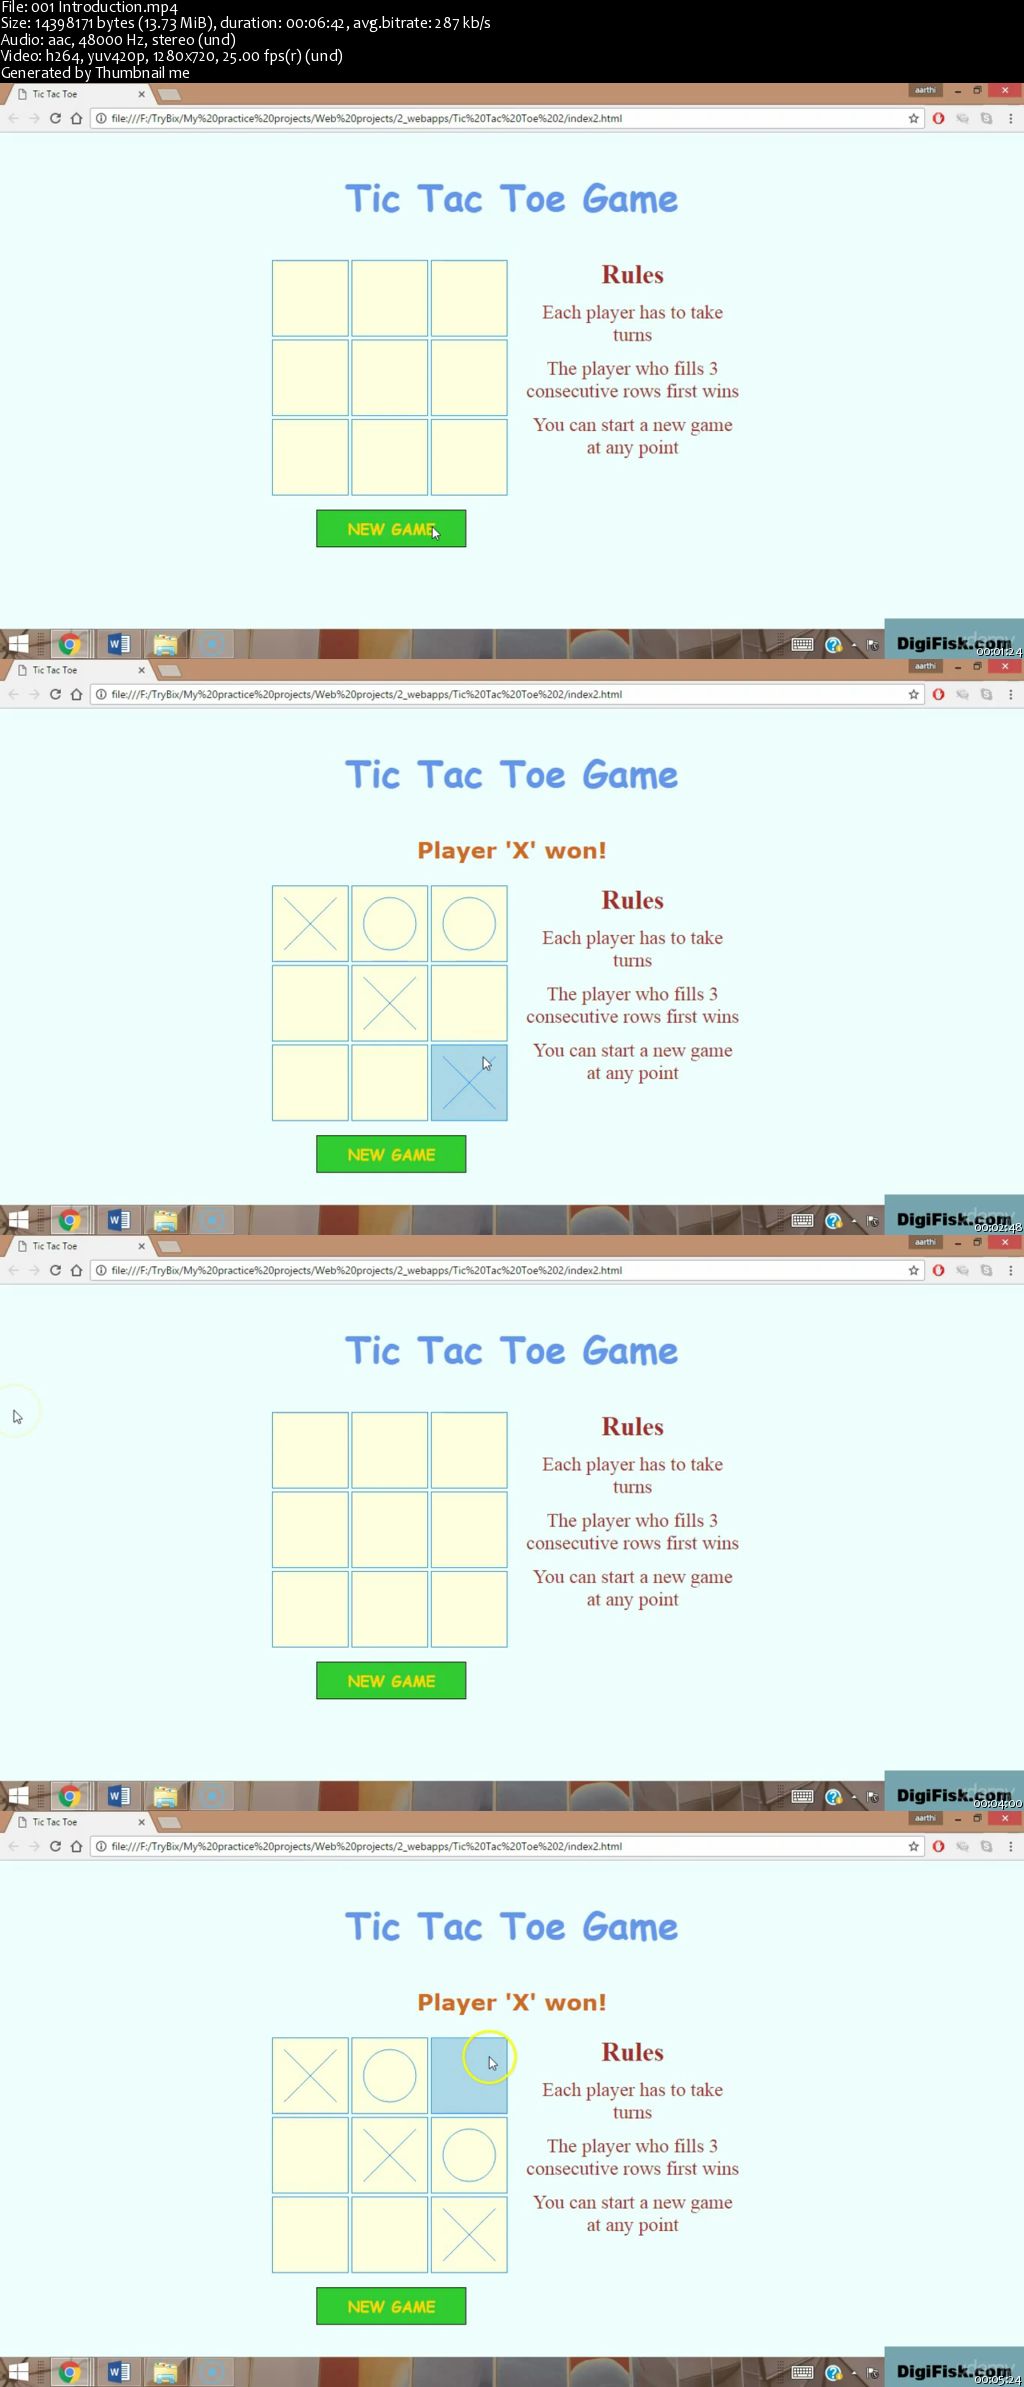 Learn Javascript & HTML5 Canvas - Build A Tic Tac Toe Game